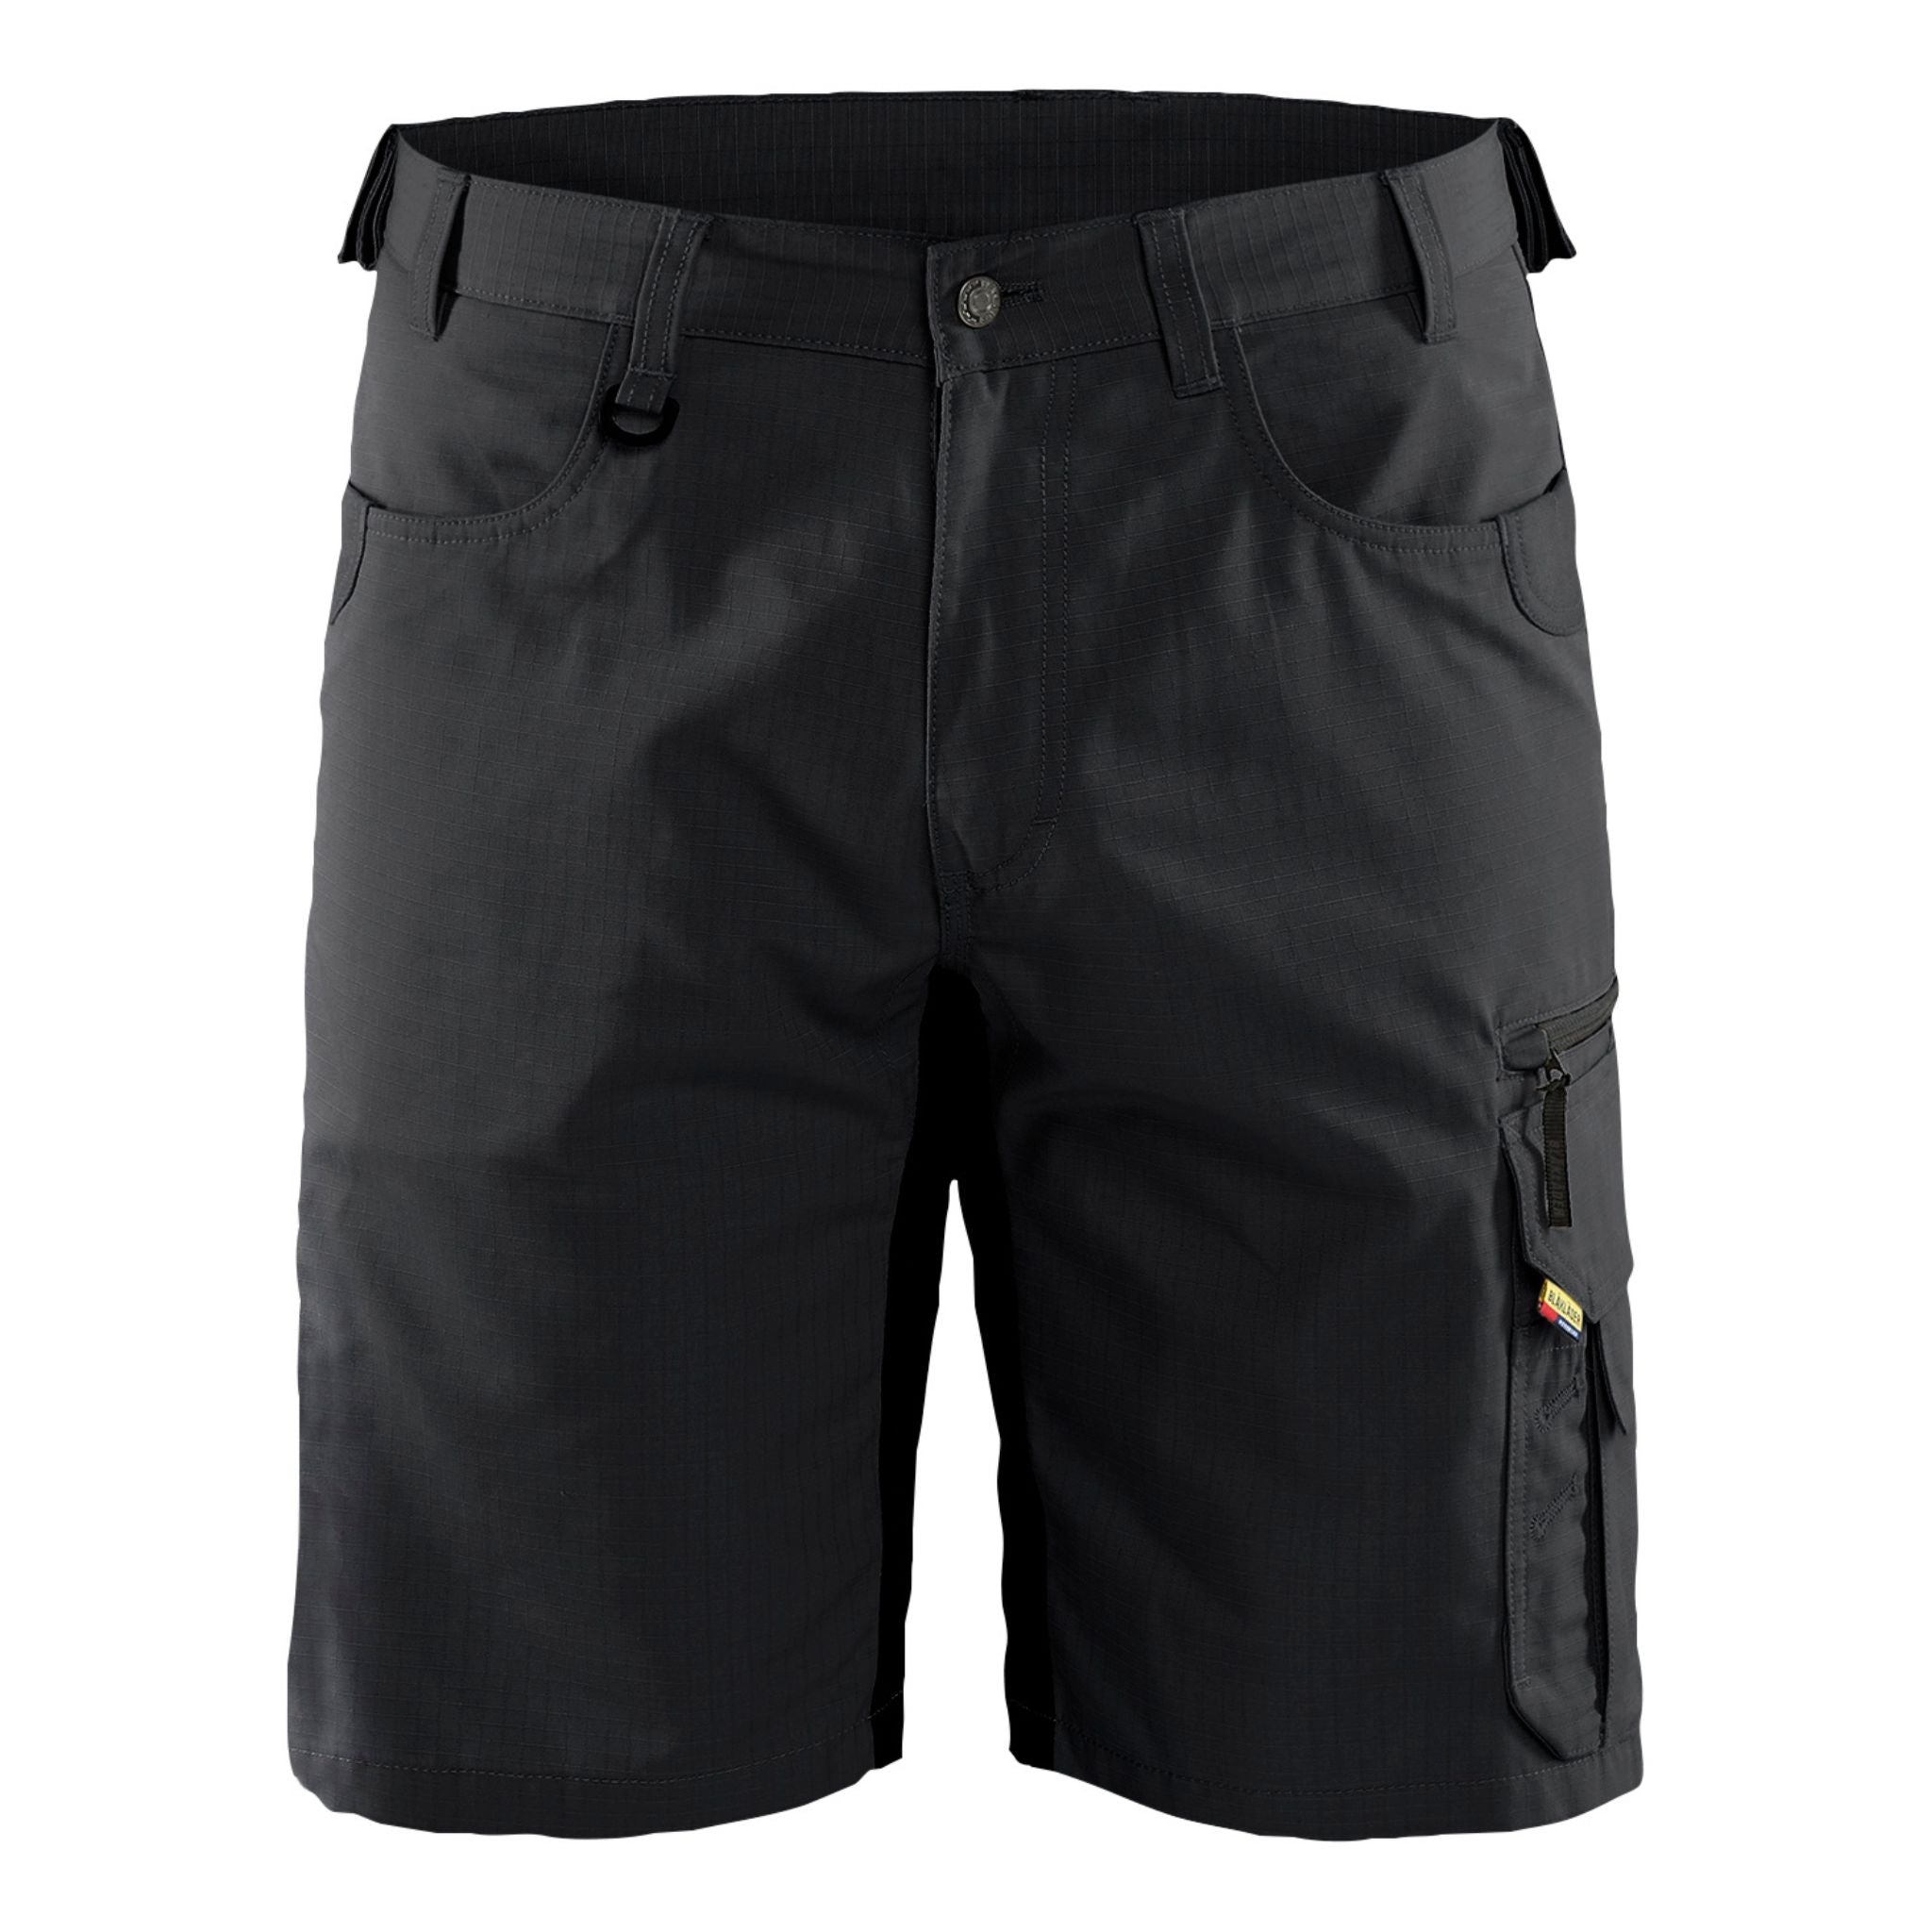 Women's black eleven pocket ripstop shorts